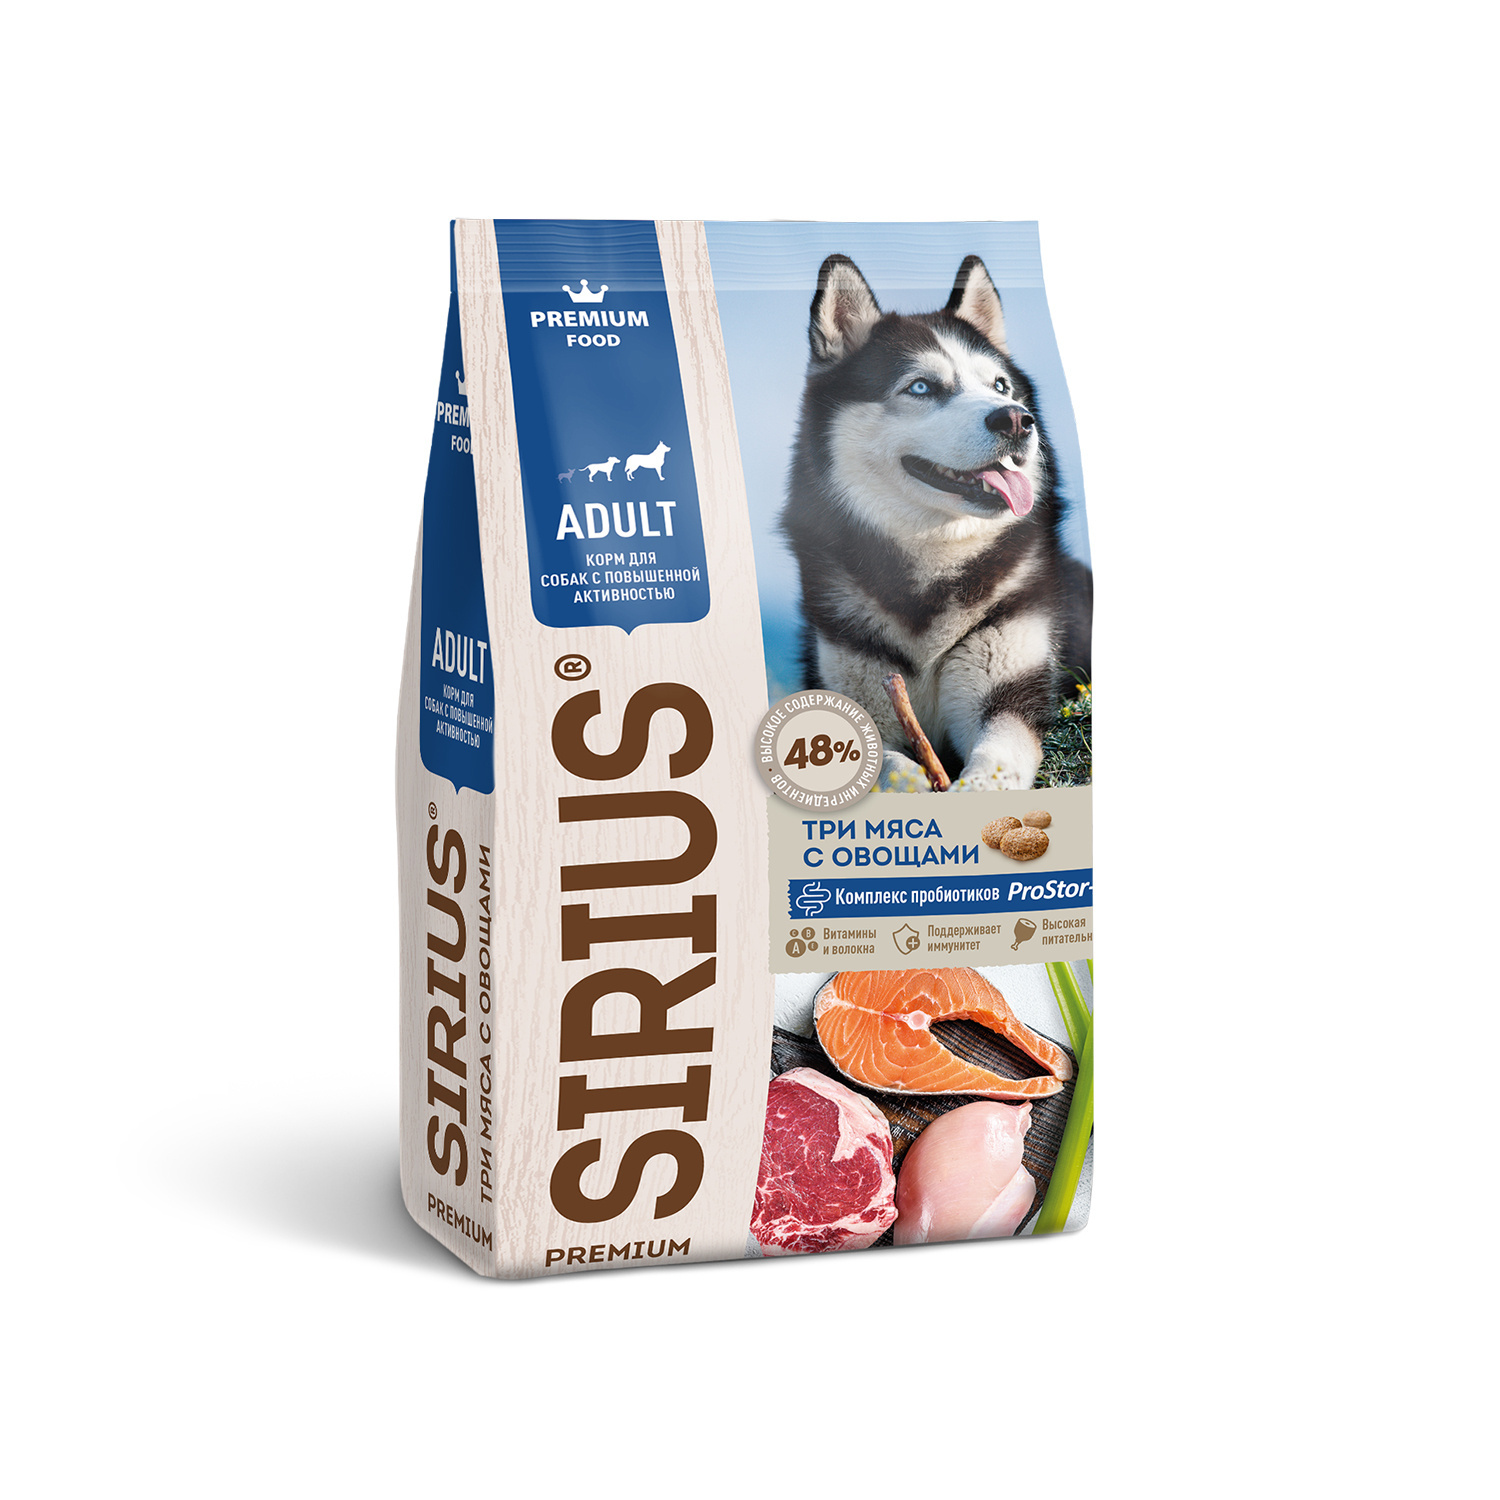 Sirius Sirius сухой корм для собак с повышенной активностью, три мяса с овощами (15 кг) sirius sirius сухой корм для собак говядина с овощами 15 кг